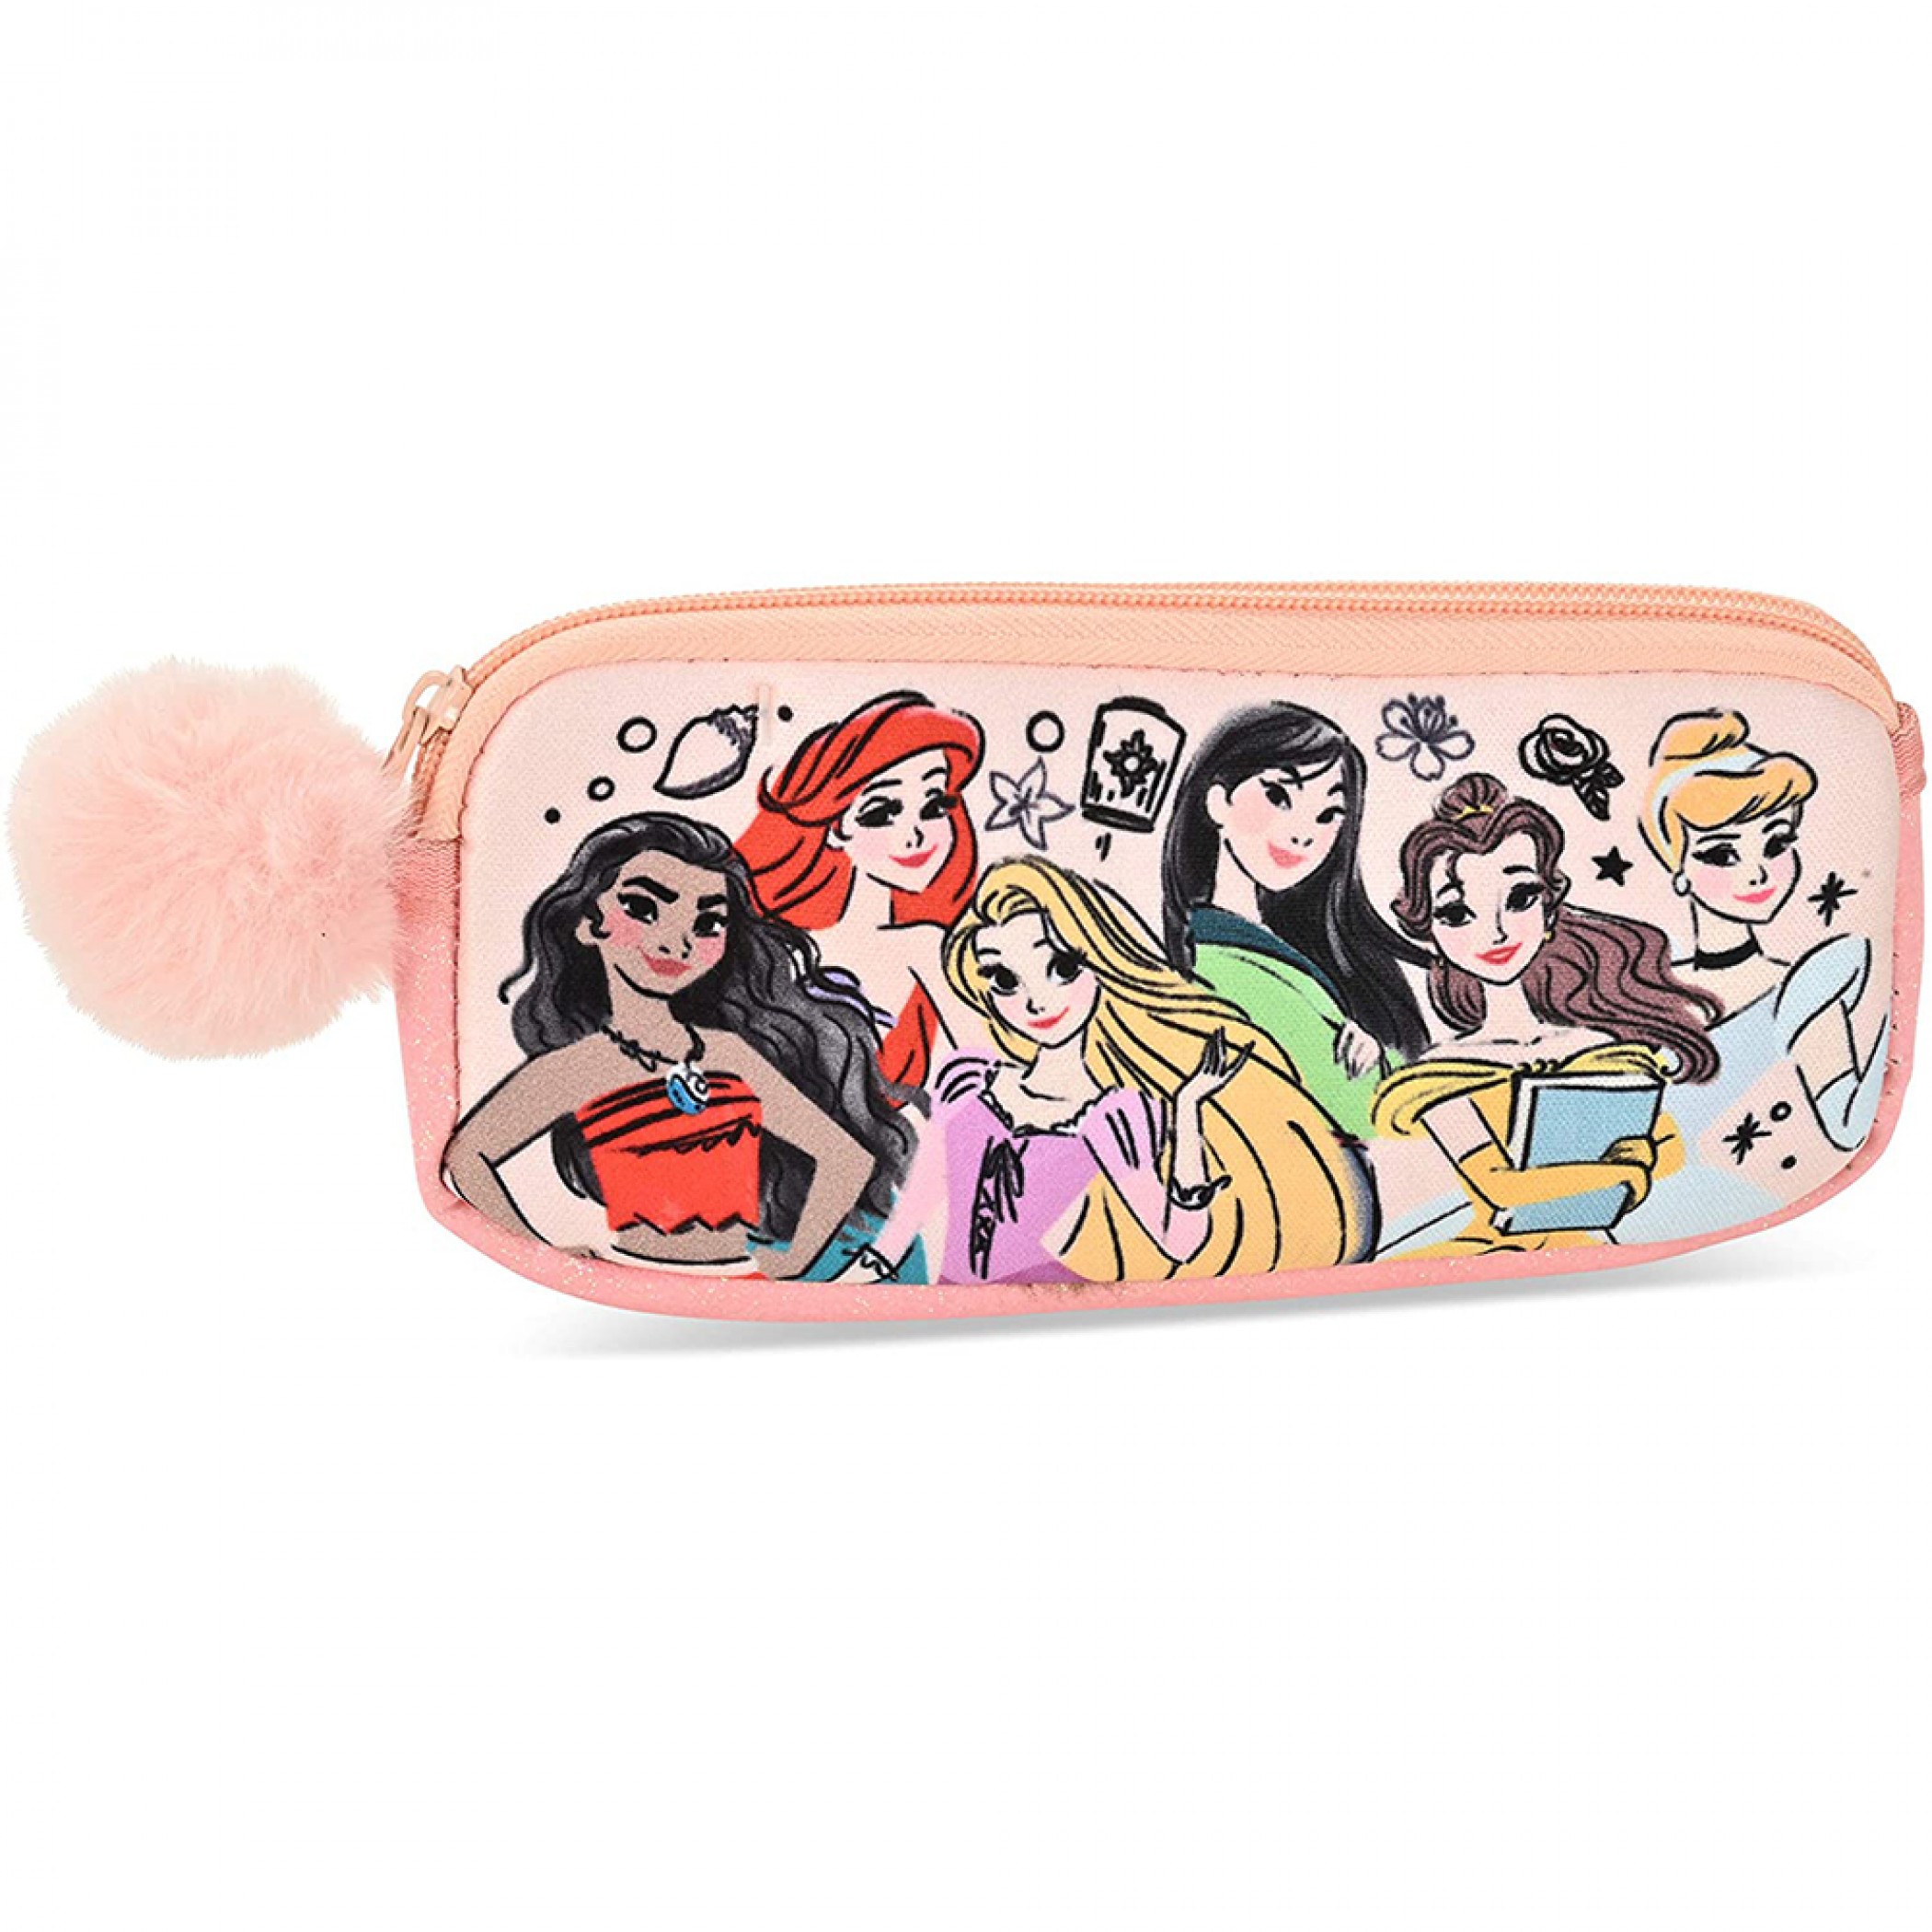 Disney Princesses Characters Girls Sunglasses w/ Pom Pom Pouch Set